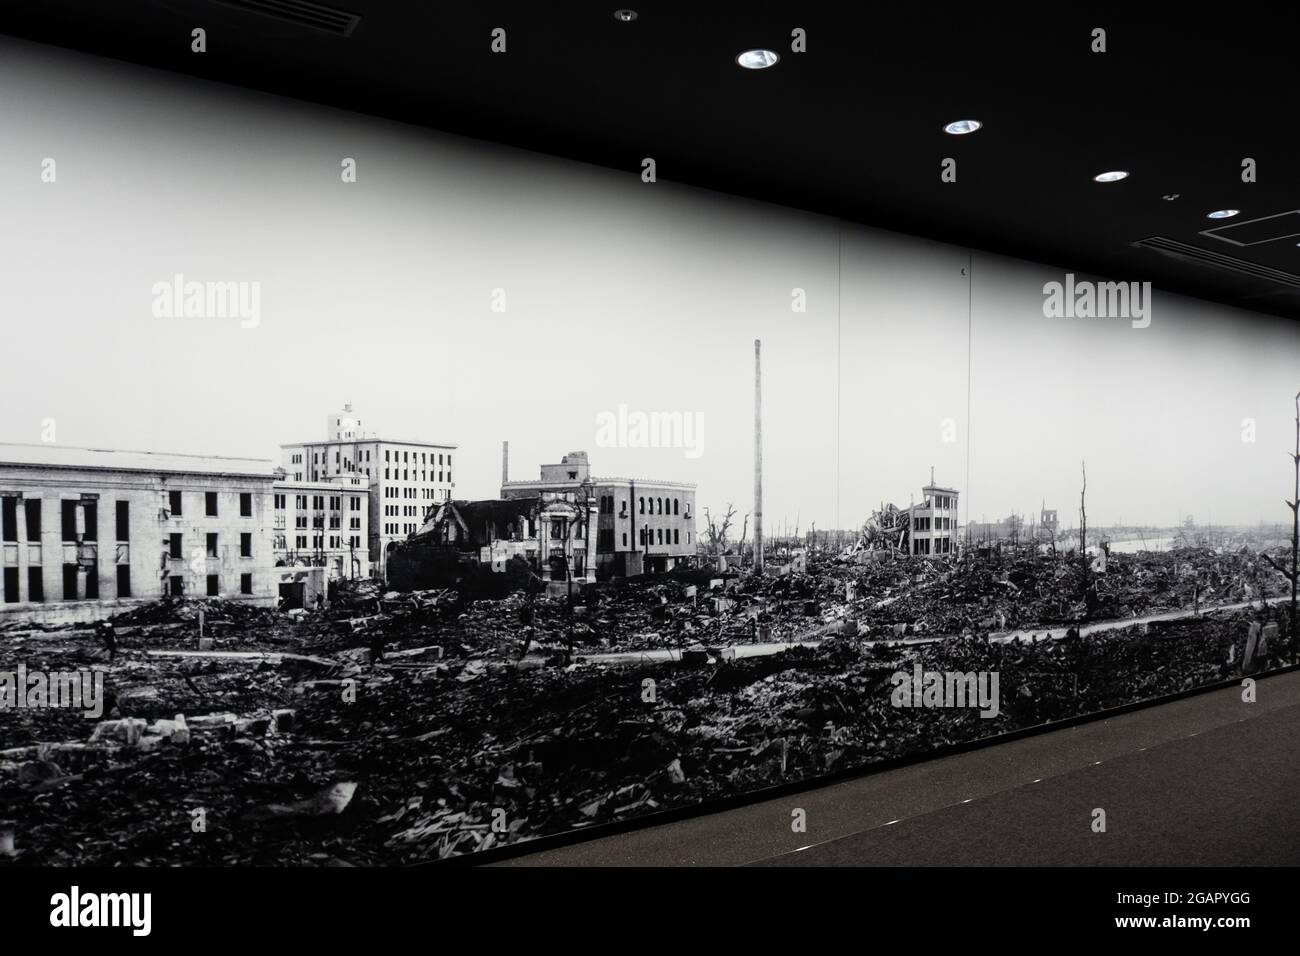 Hiroshima, Japan, 31/10/19.Foto der zerstörten Stadt Hiroshima nach dem Atombombenanschlag am 6. August 1945, Ausstellung des Friedensdenkmalmuseums von Hiroshima Stockfoto